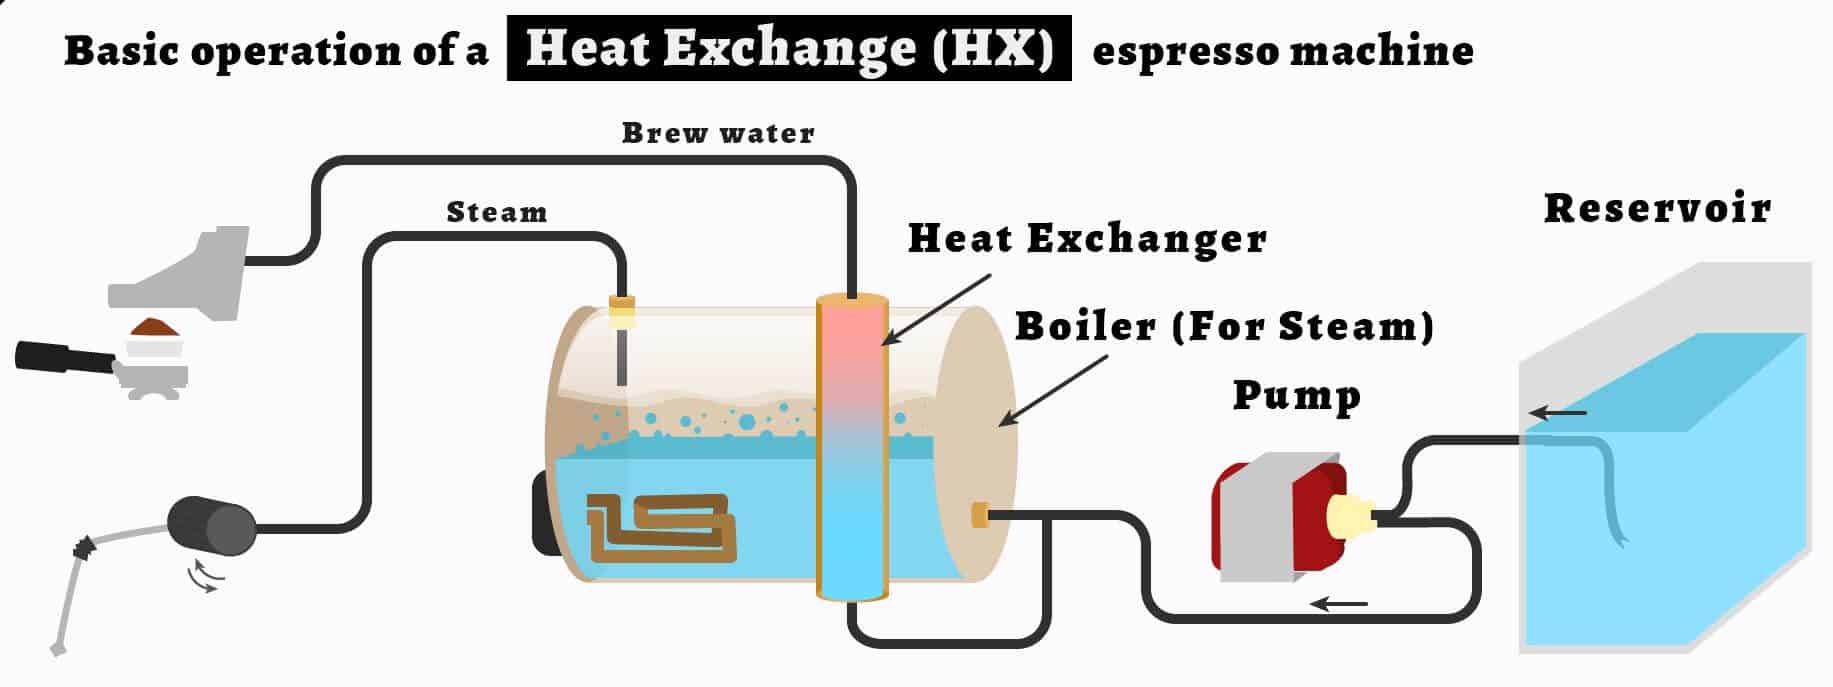 basic operation of a heat exchange (hx) espresso machine